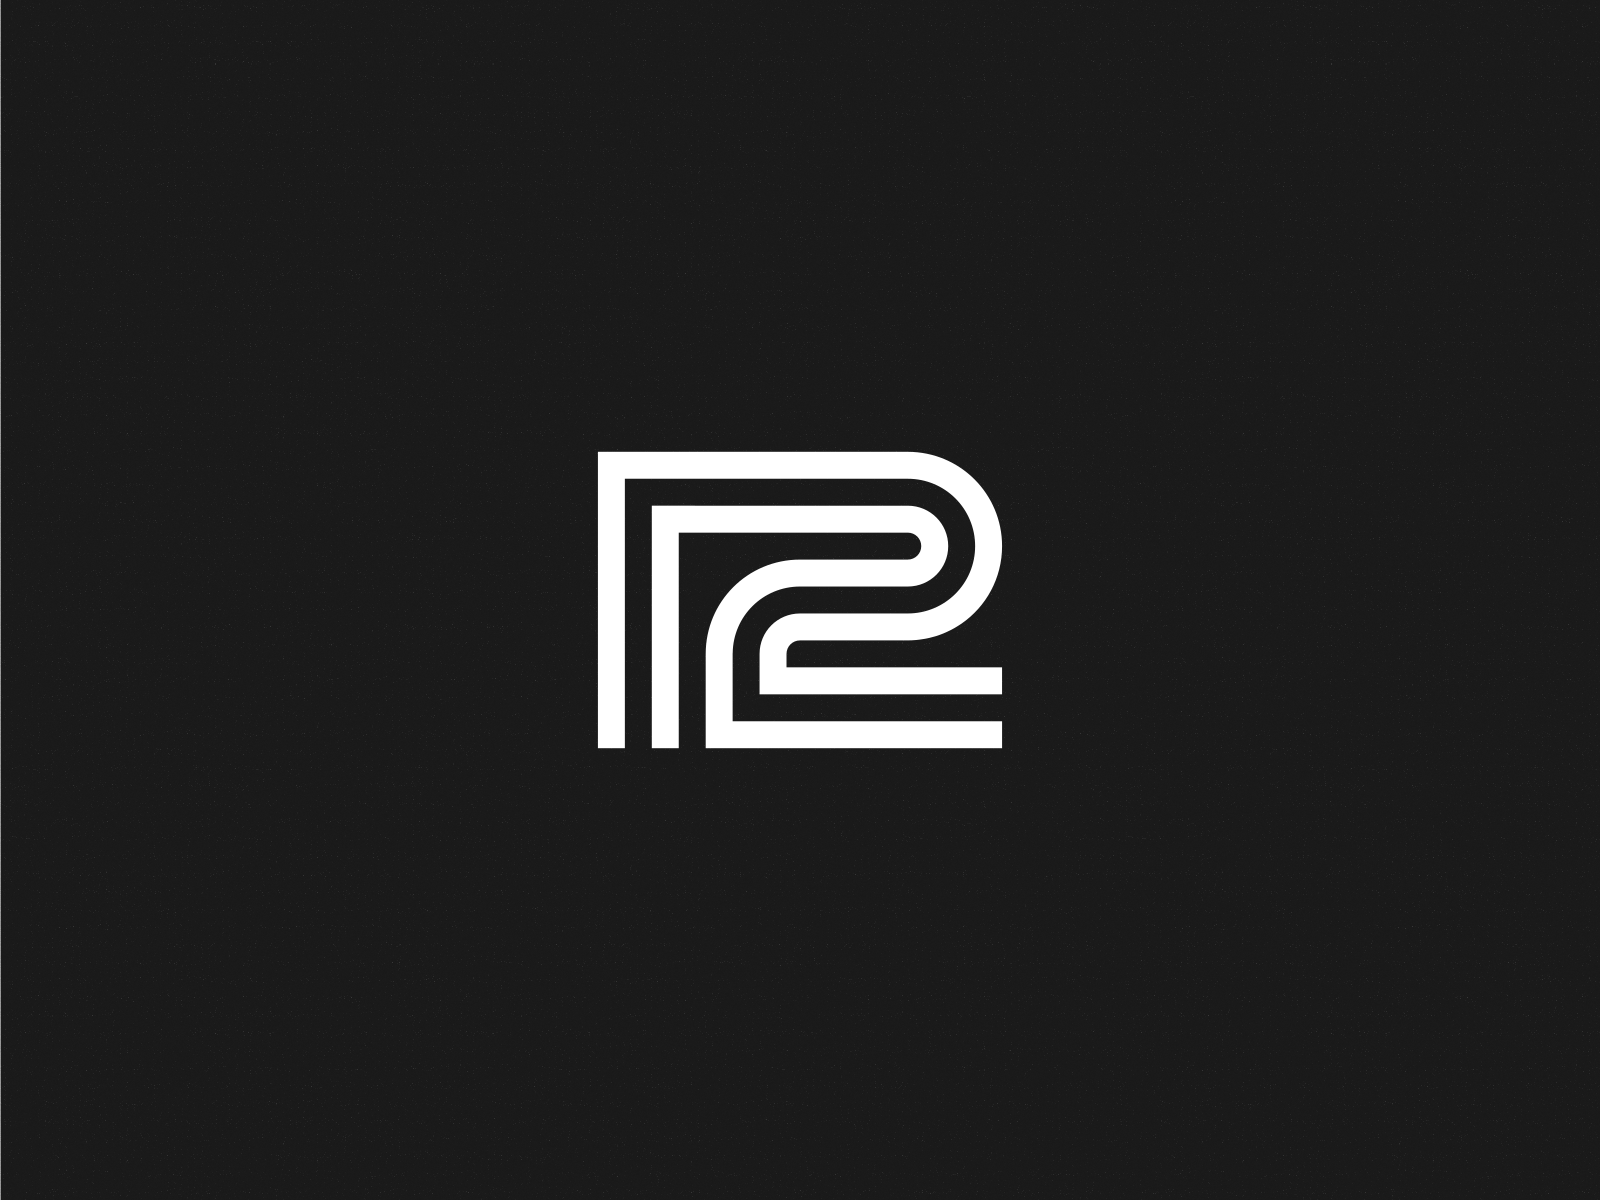 Rolas - Monogram Logo #2 by Imedia on Dribbble